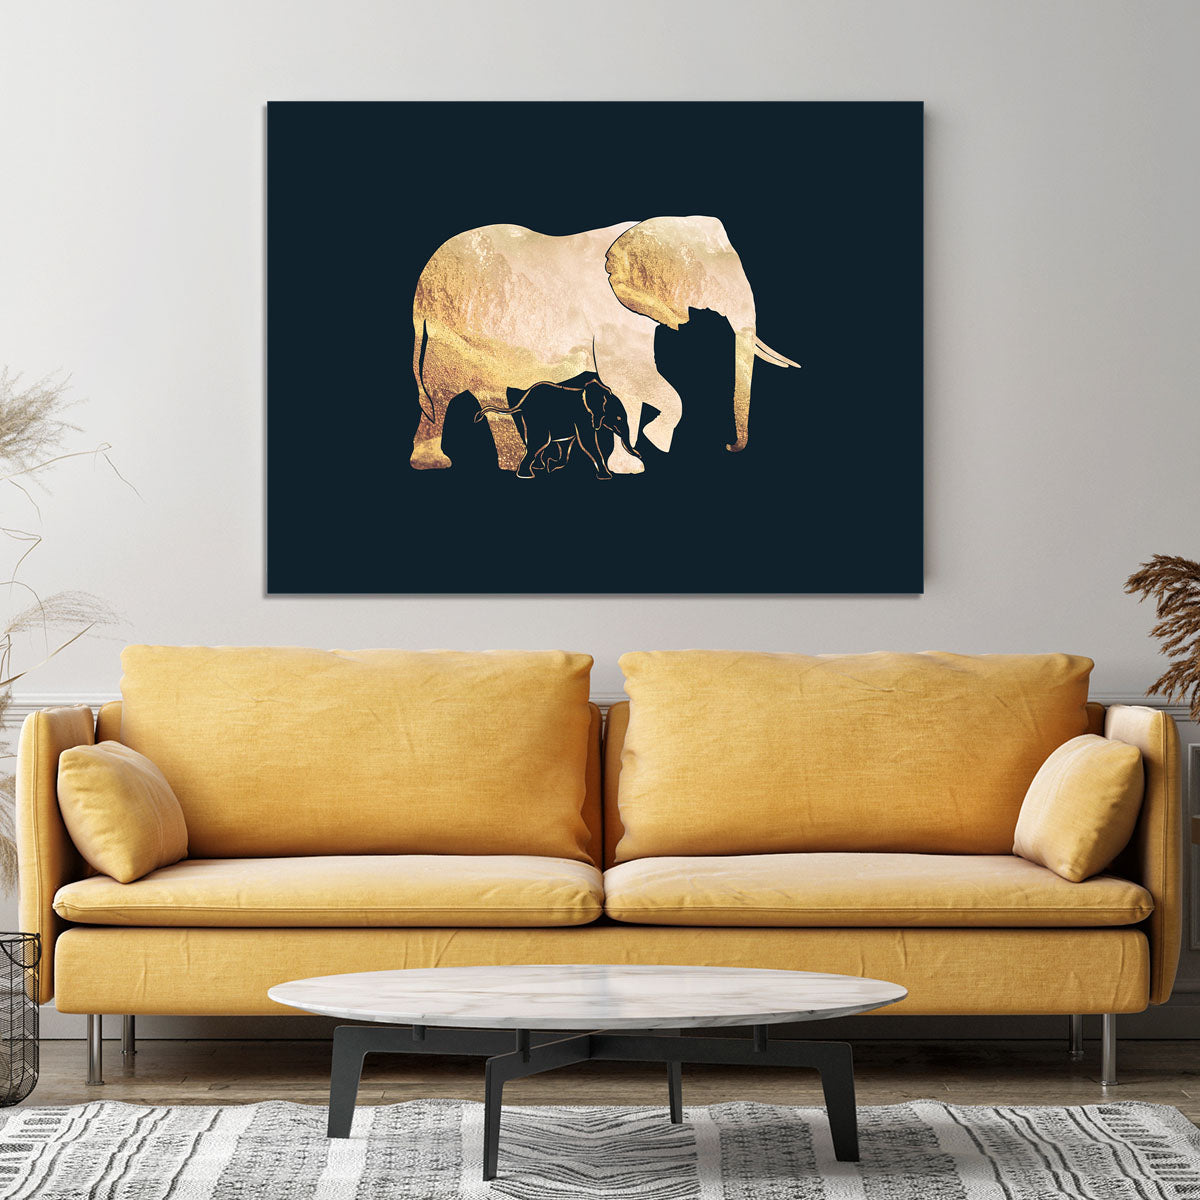 Black gold elephants 2 Canvas Print or Poster - 1x - 4